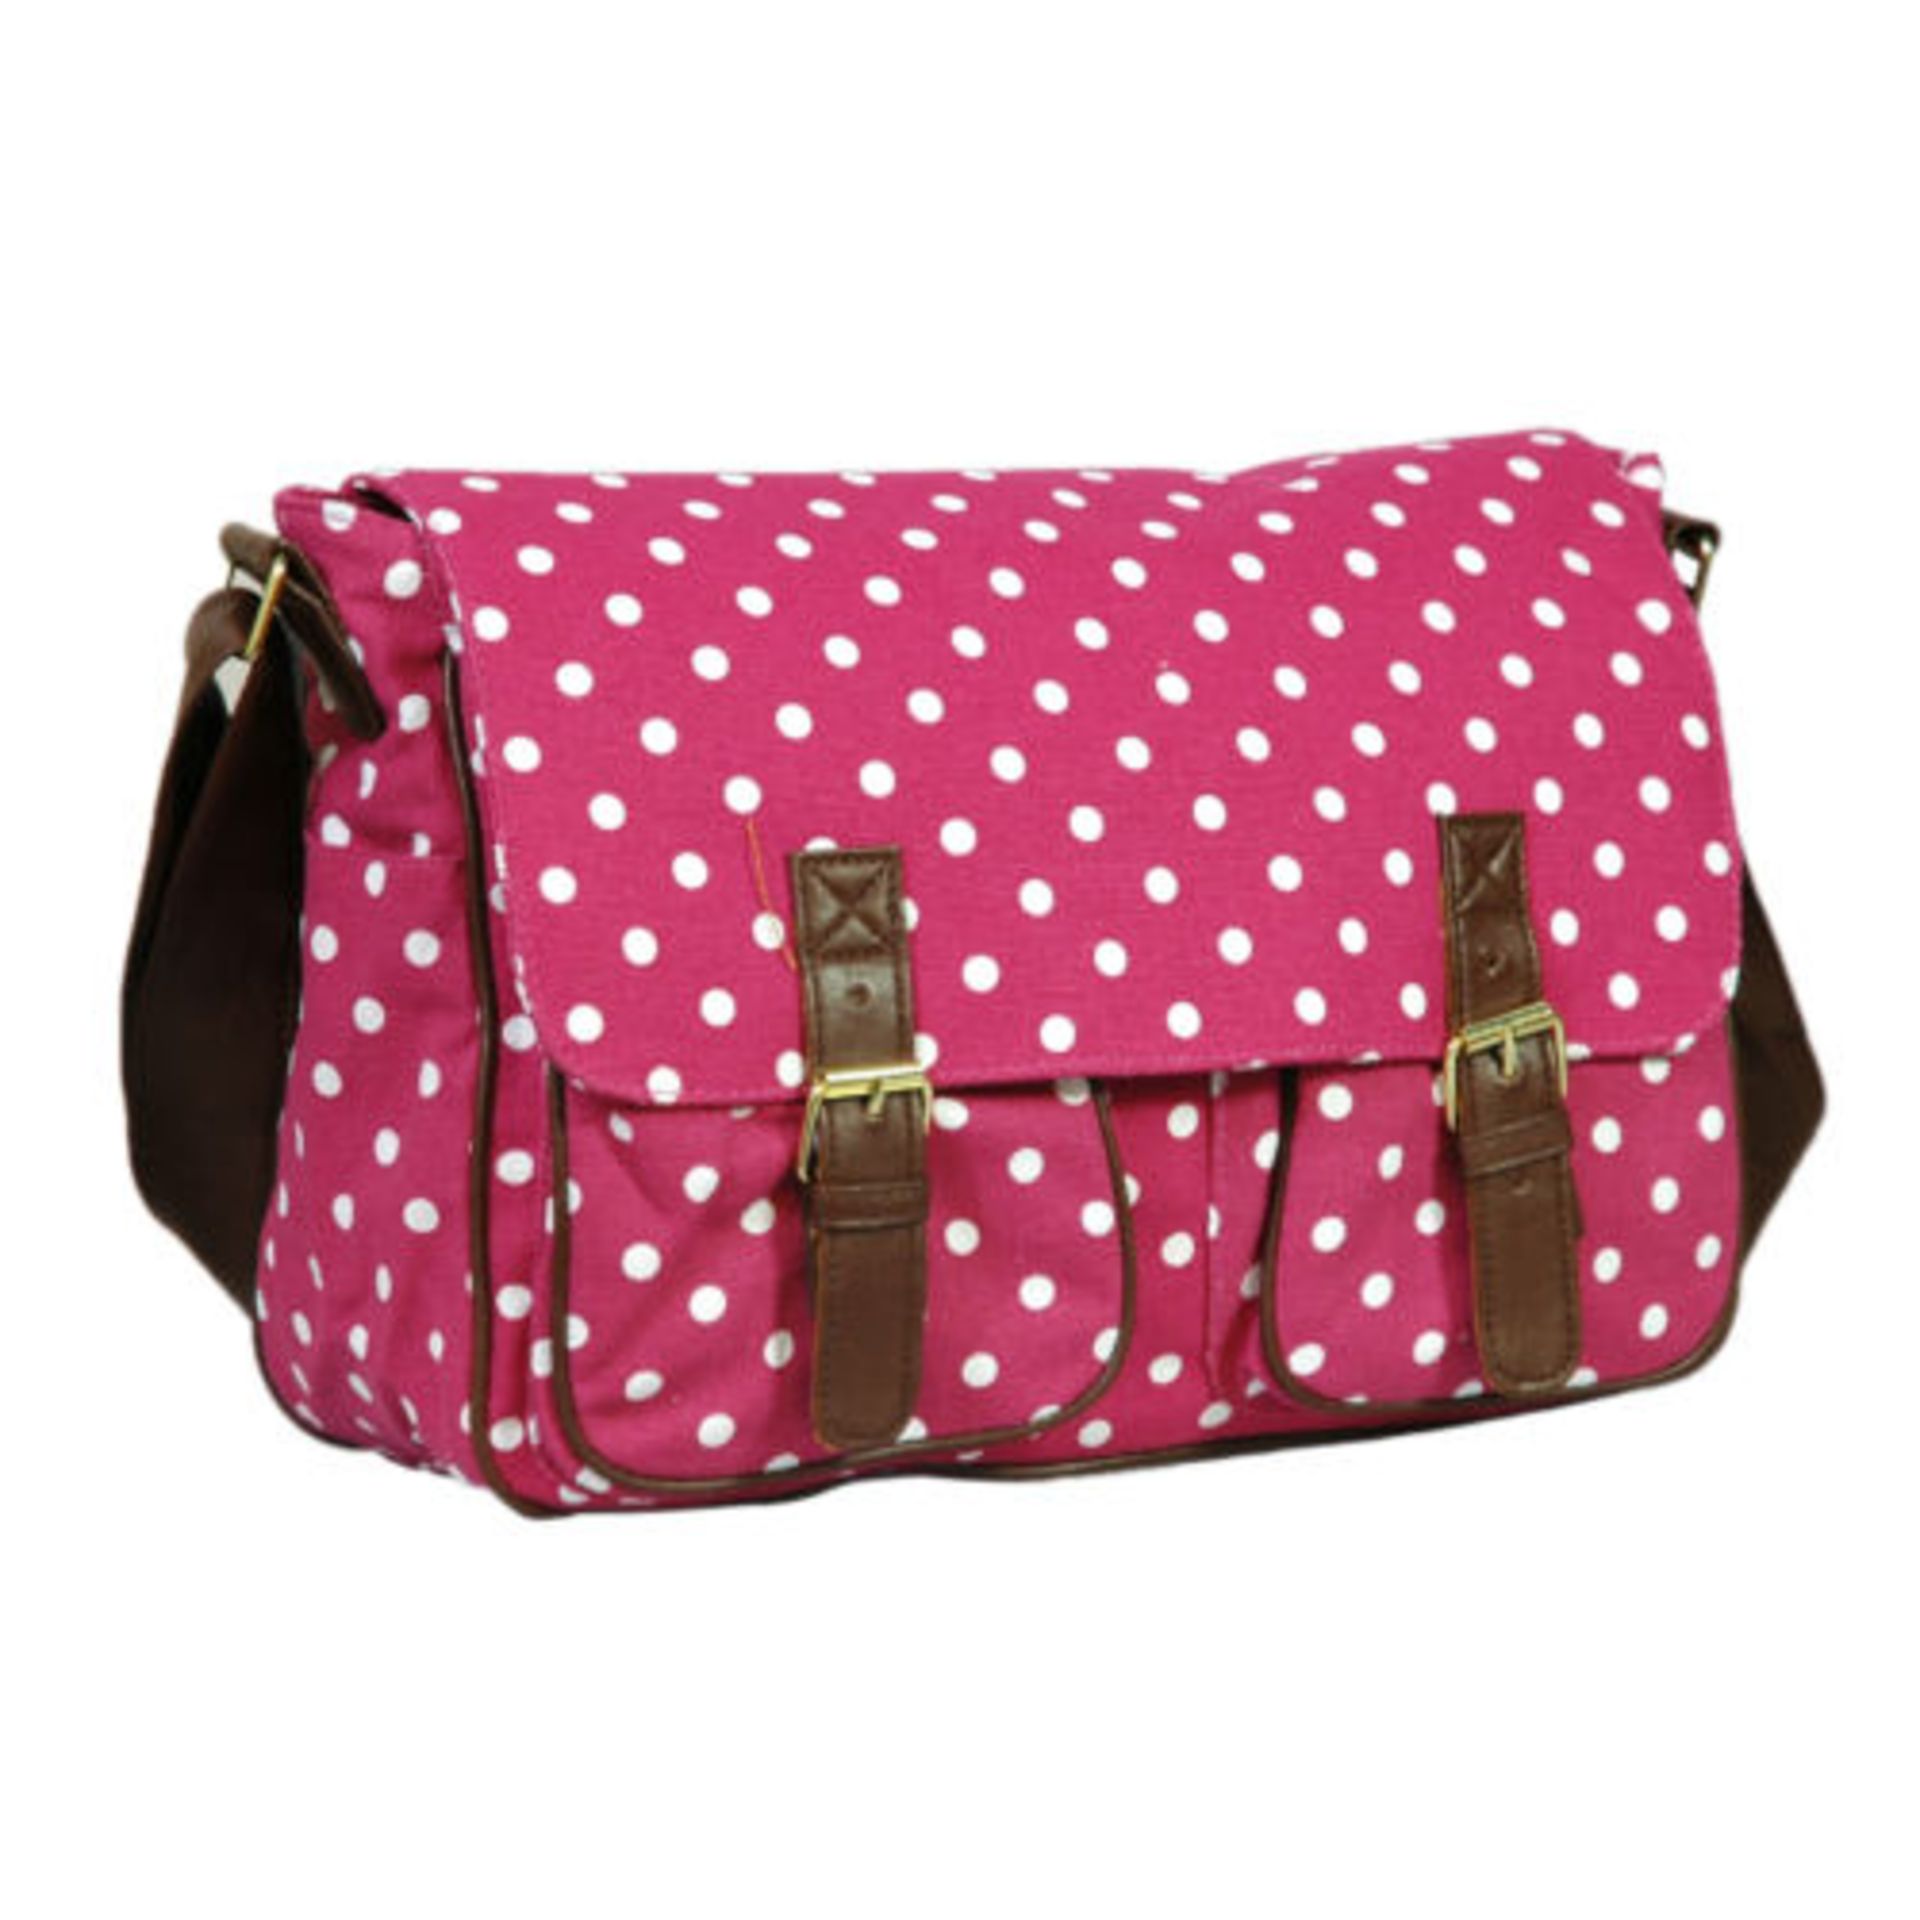 V Brand New Elizabeth Rose Polka Dot Pink/White Satchel Handbag - Brown Leather Straps